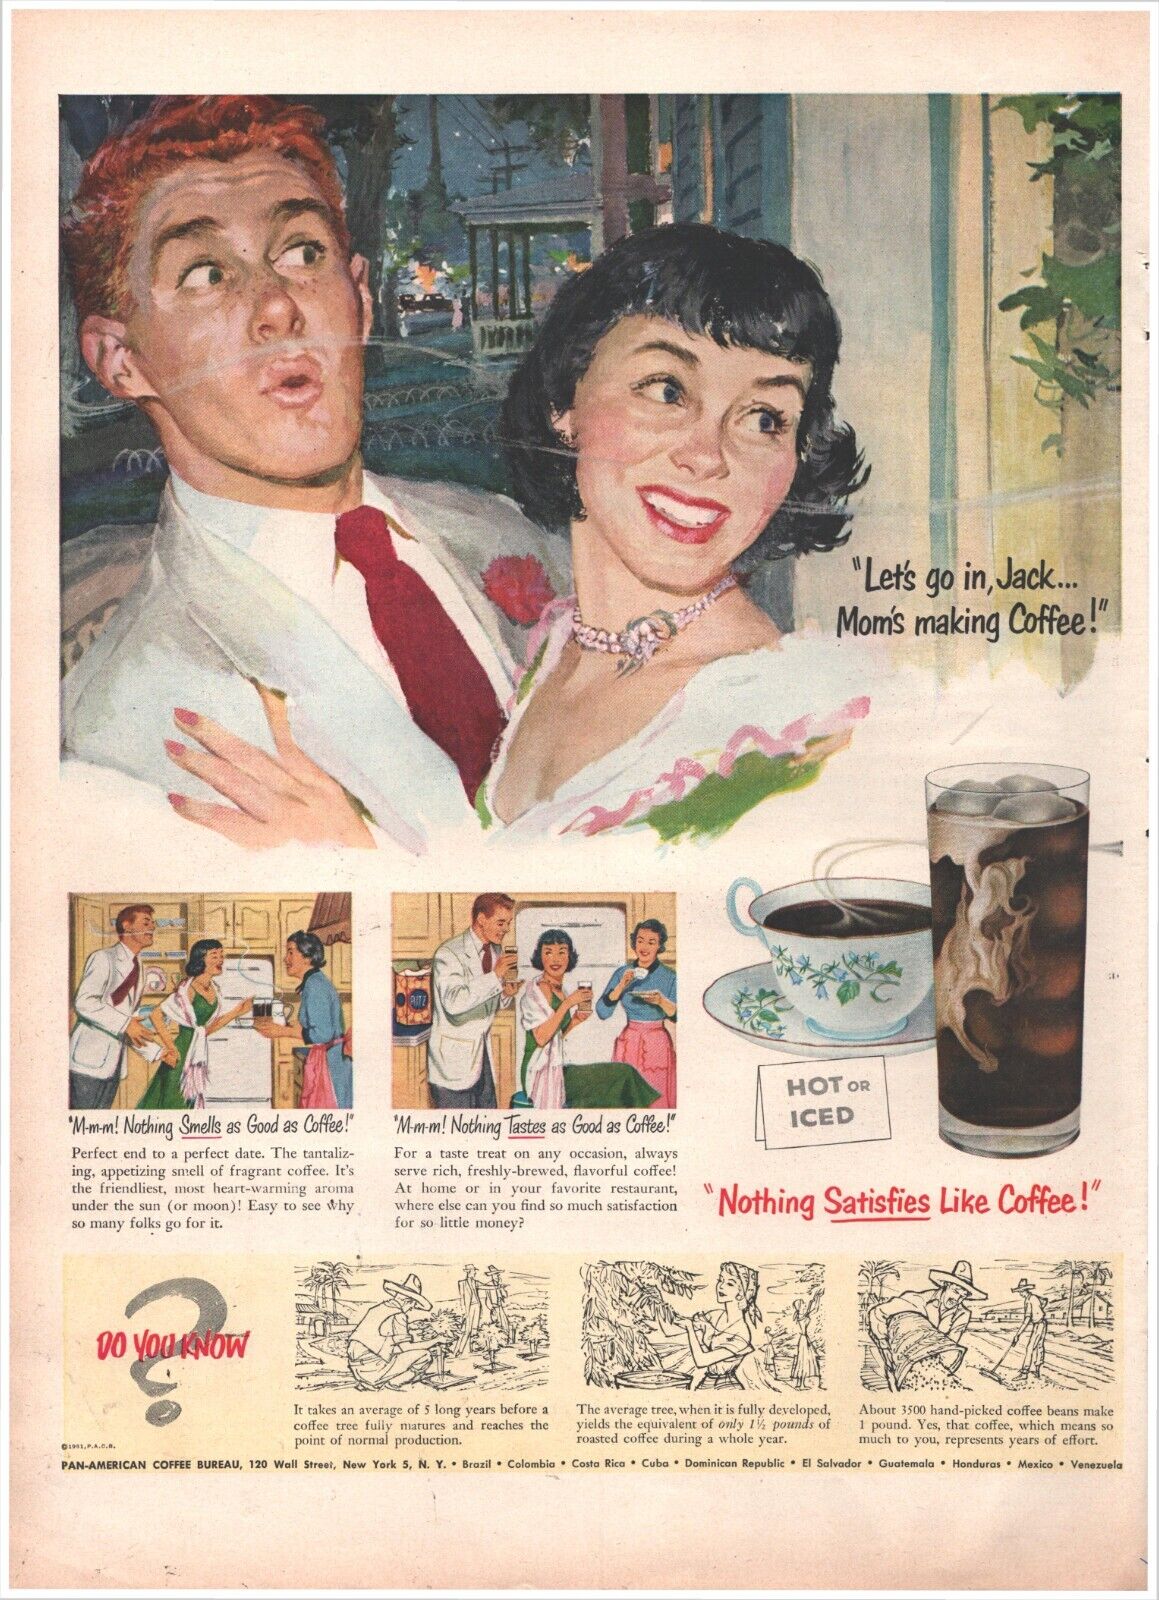 1951 Pan-American Coffee Bureau Information Vintage Original Magazine Print Ad